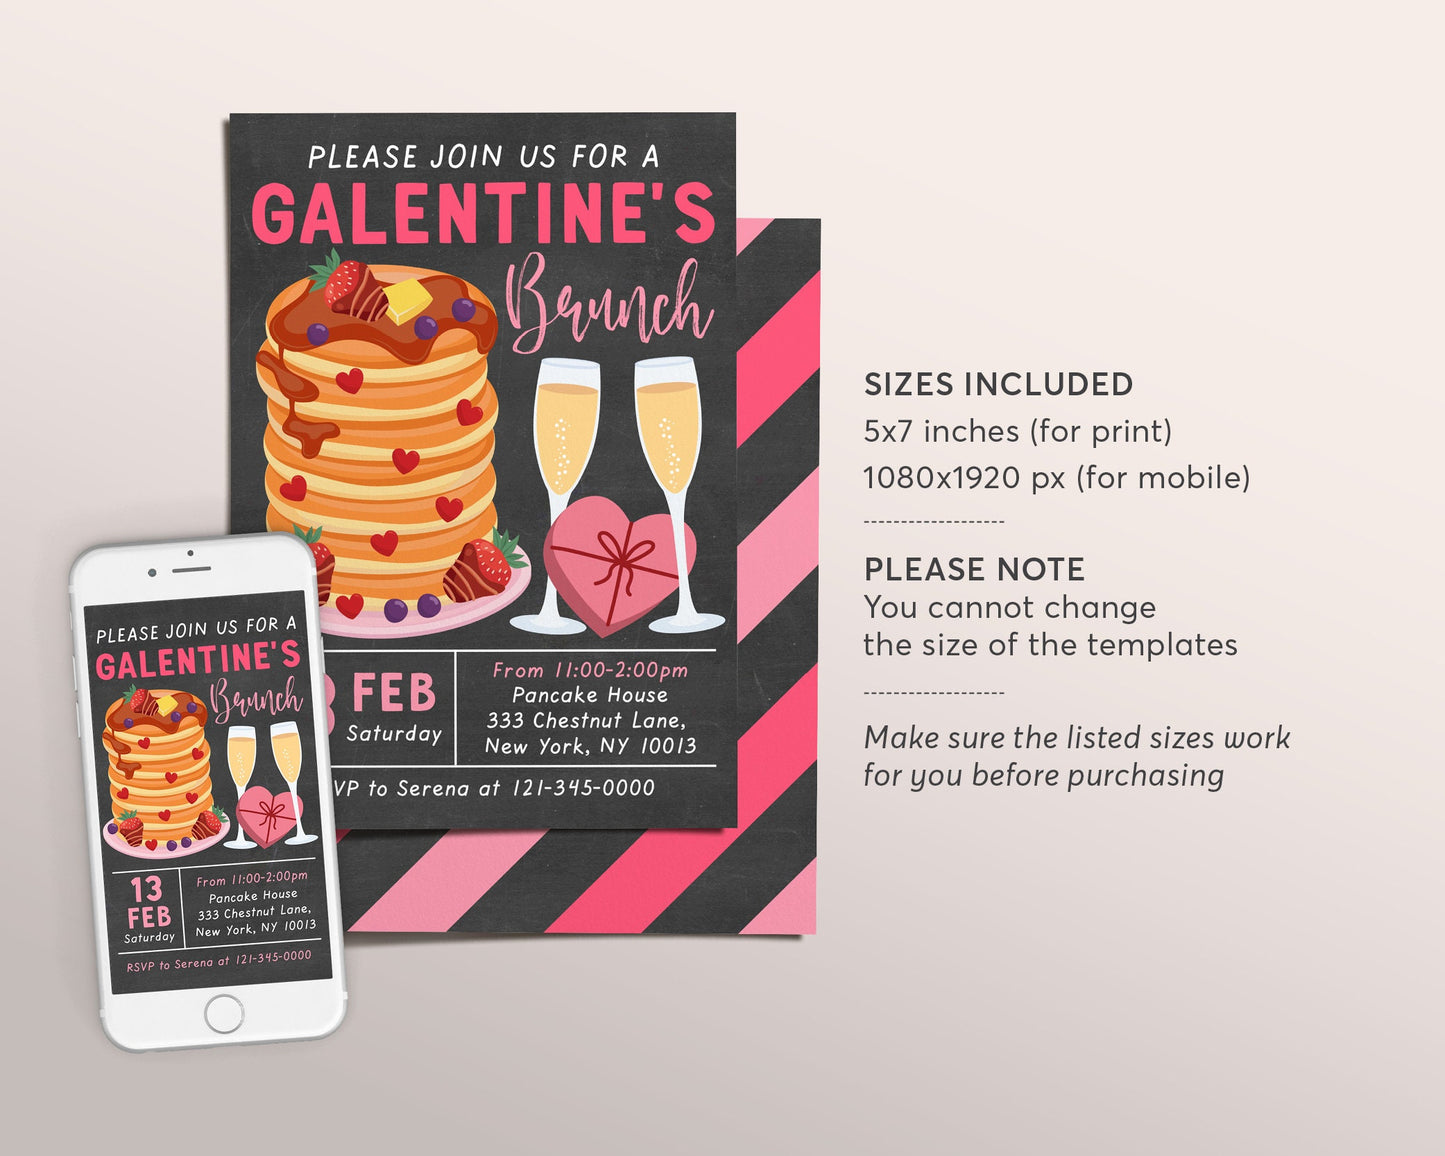 Galentine's Brunch Invitation Editable Template, Valentines Day Celebration Brunch Breakfast Invite Pancakes Champagne Heart Evite Printable